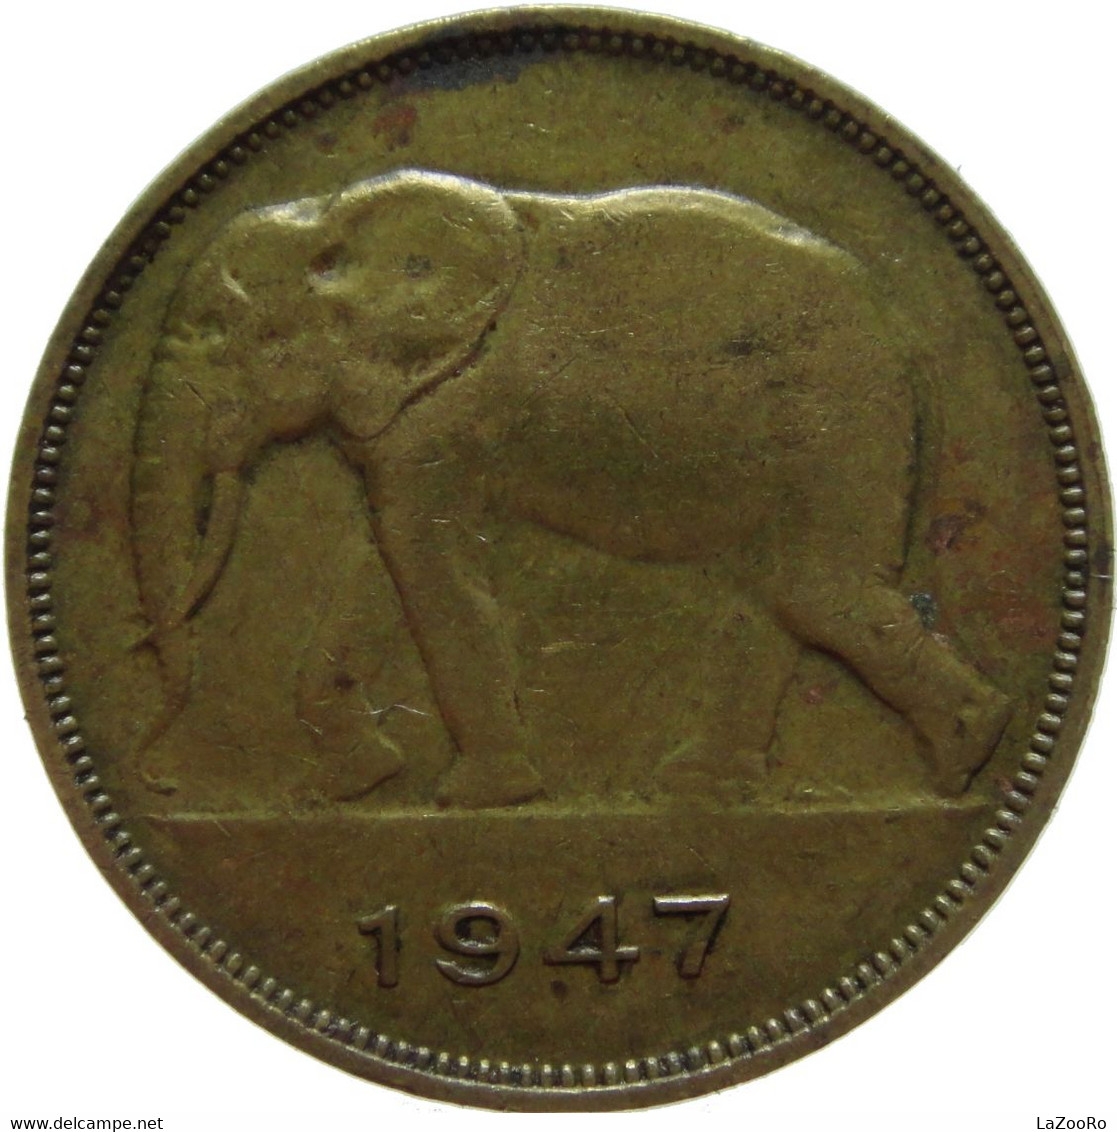 LaZooRo: Belgian Congo 5 Francs 1947 XF - 1945-1951: Regency